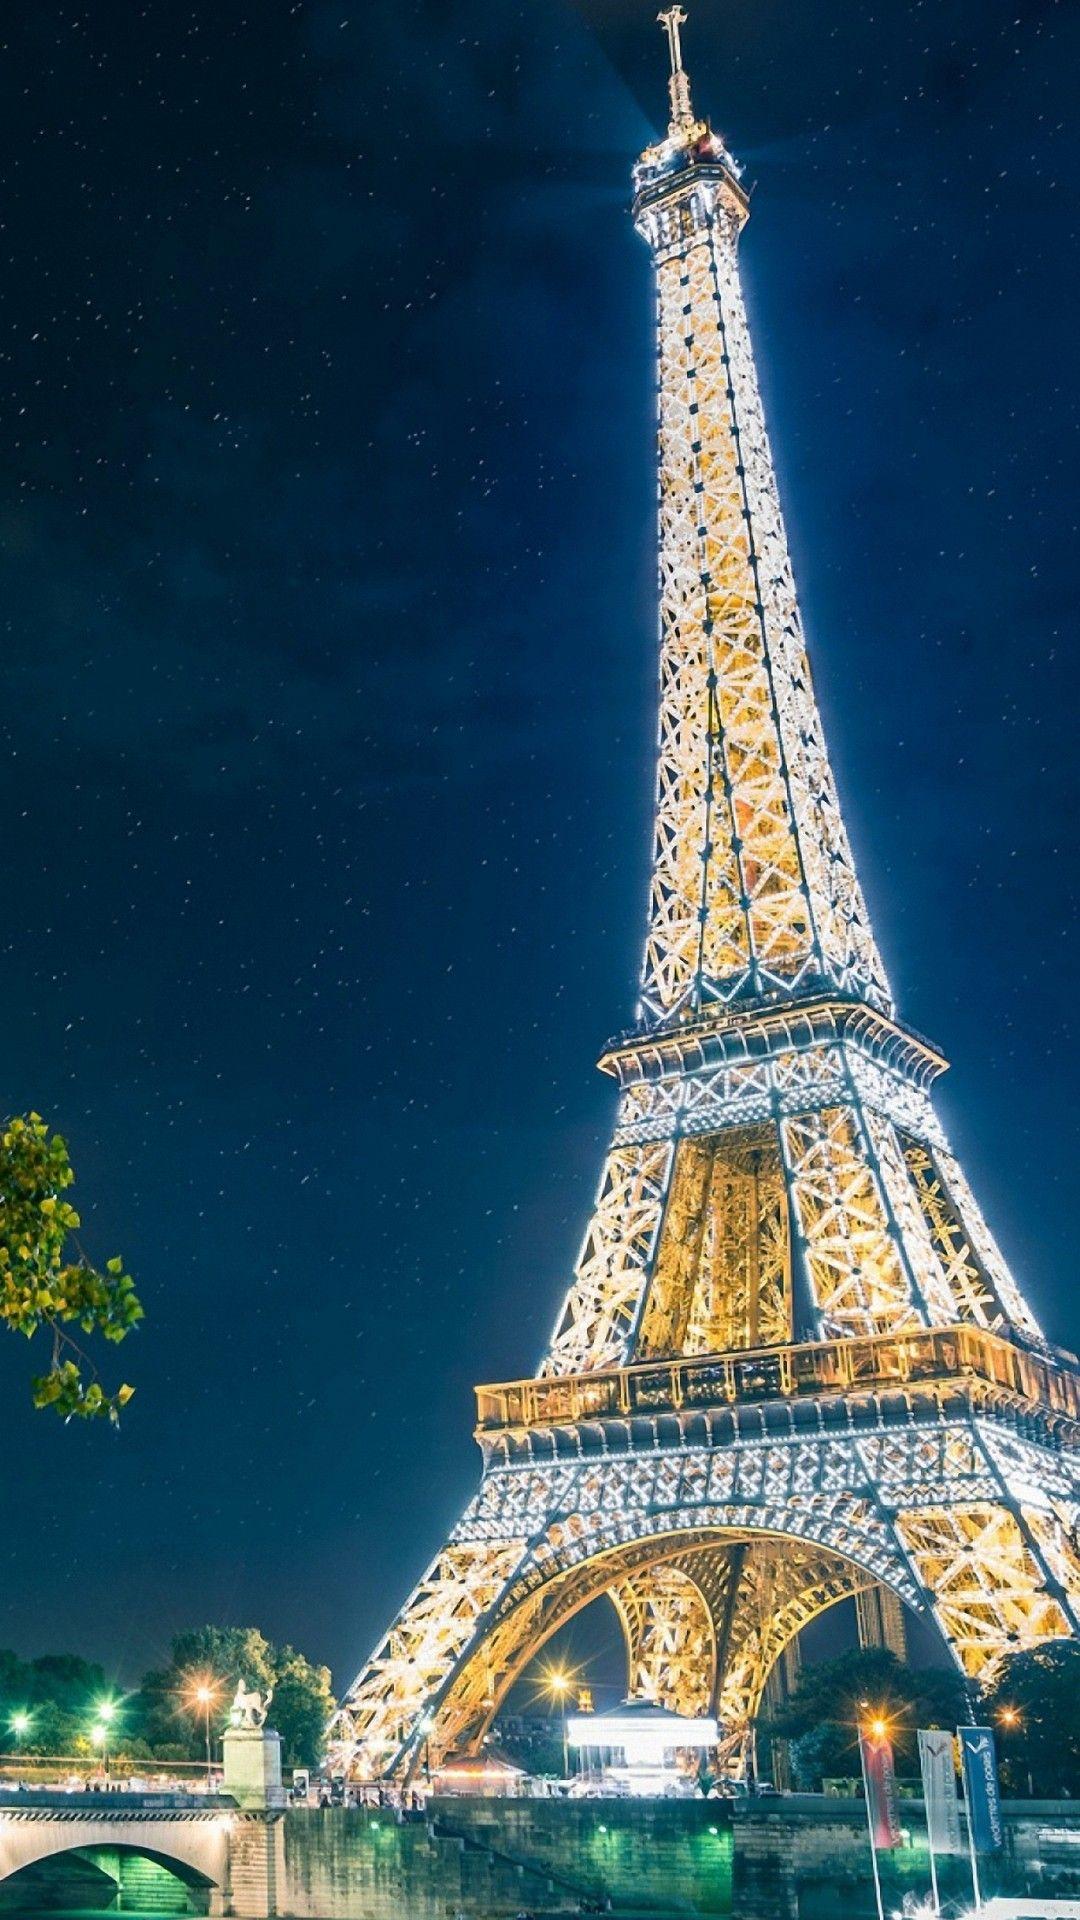 Eiffel Tower at night. iphone wallpaper. Eiffel